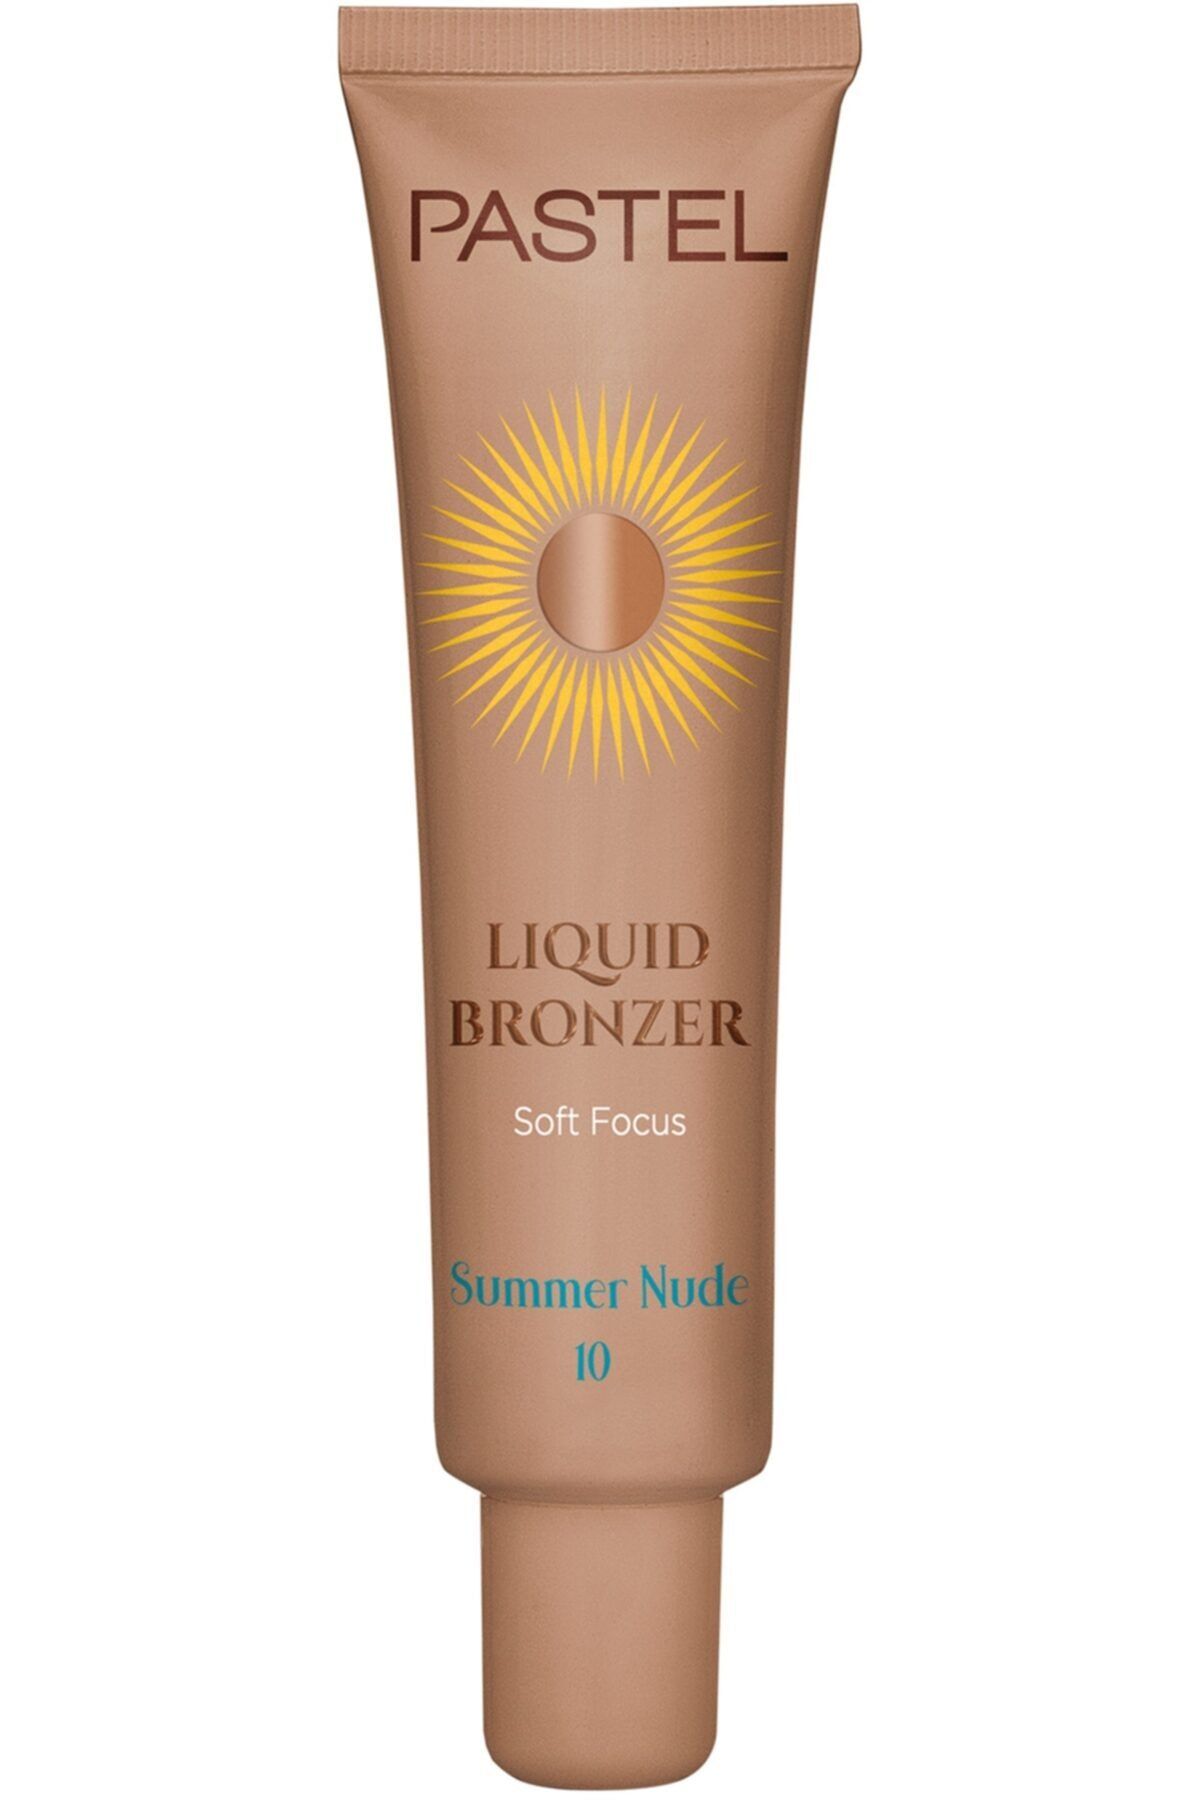 Pastel Likit Bronzer Soft Focus Summer Nude 10